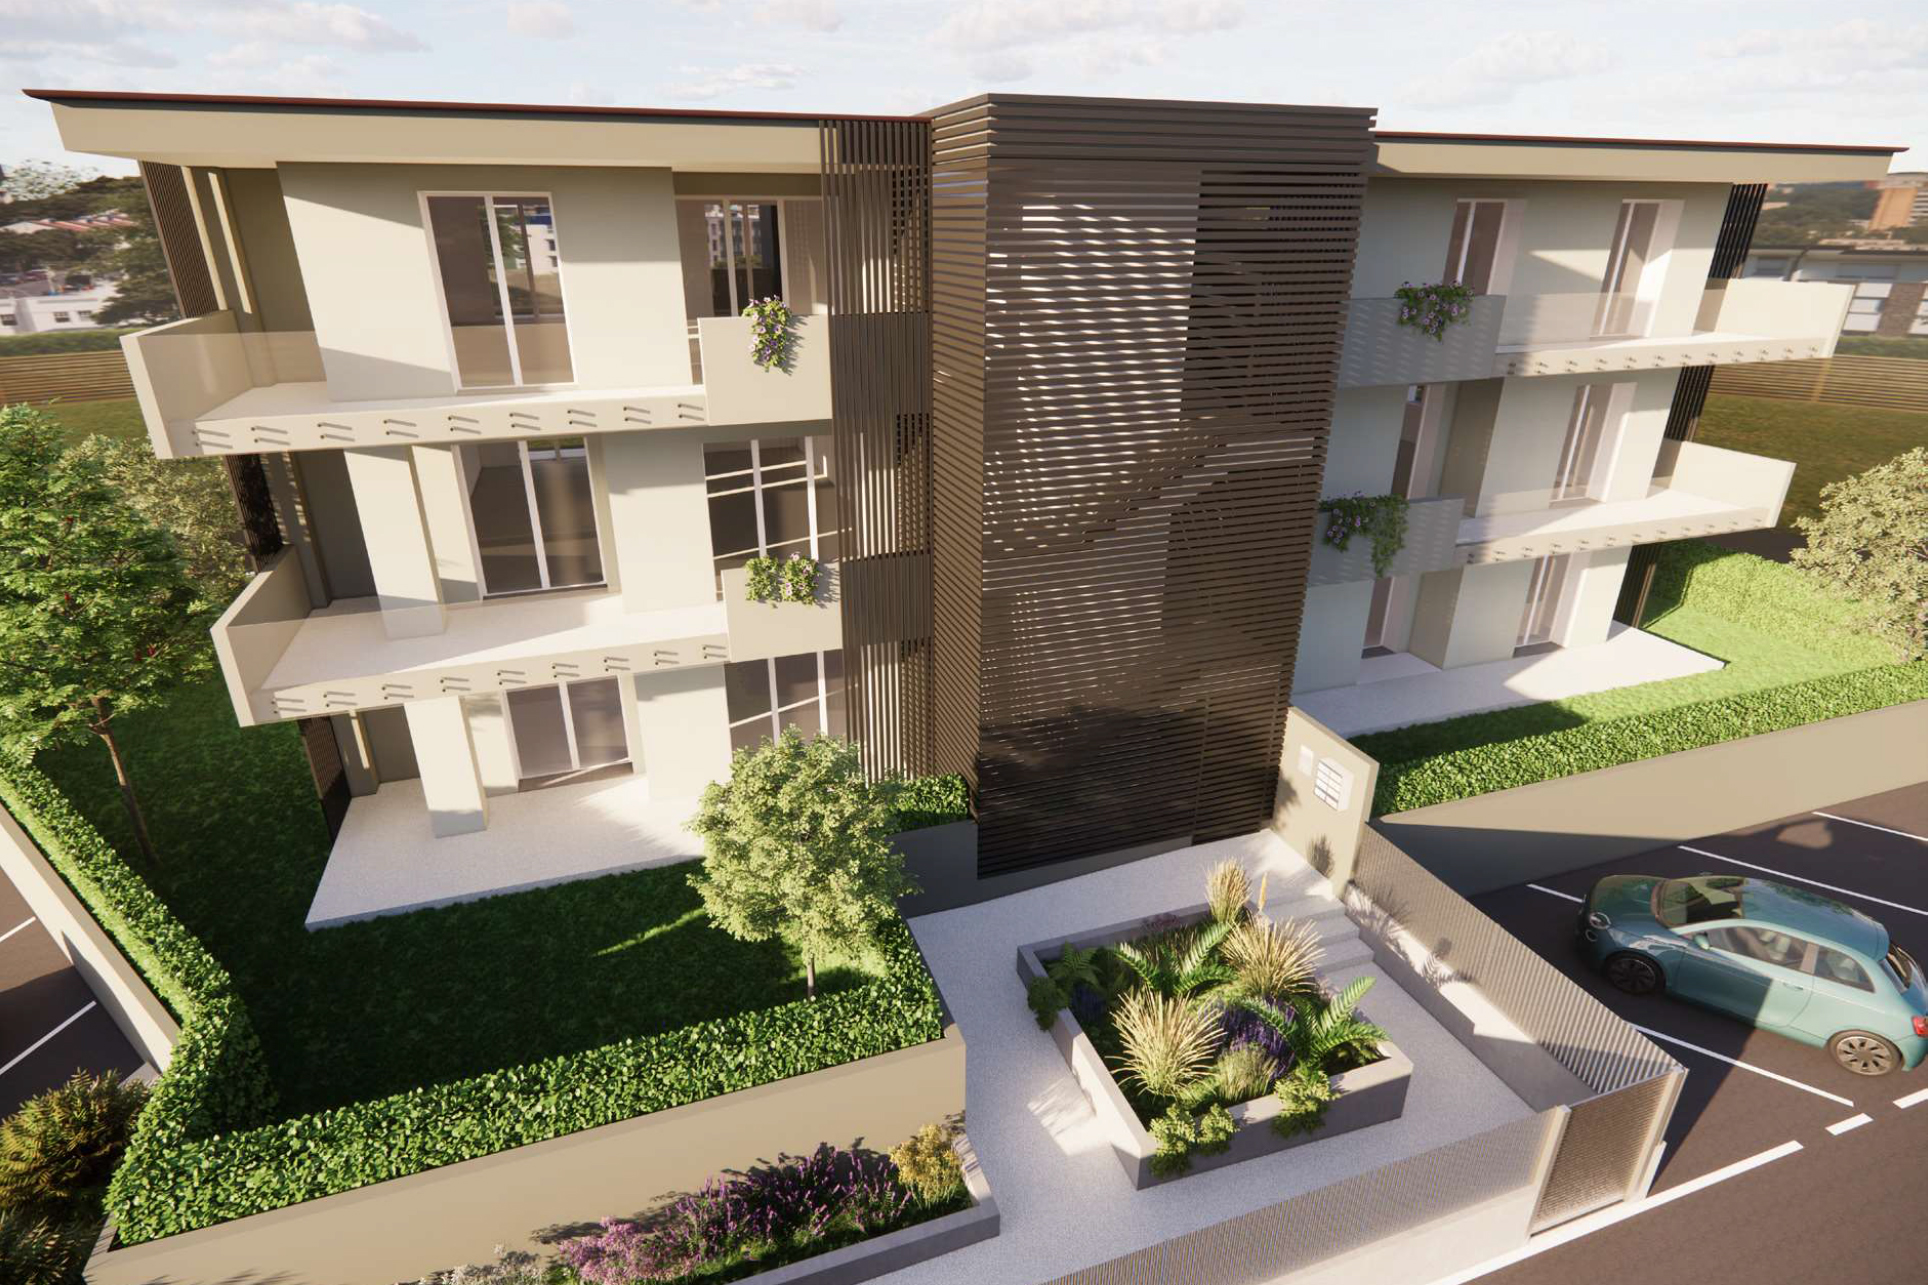 Vendita nuovo appartamento con giardino Pesaro - Zona Pantano (CA07.3)